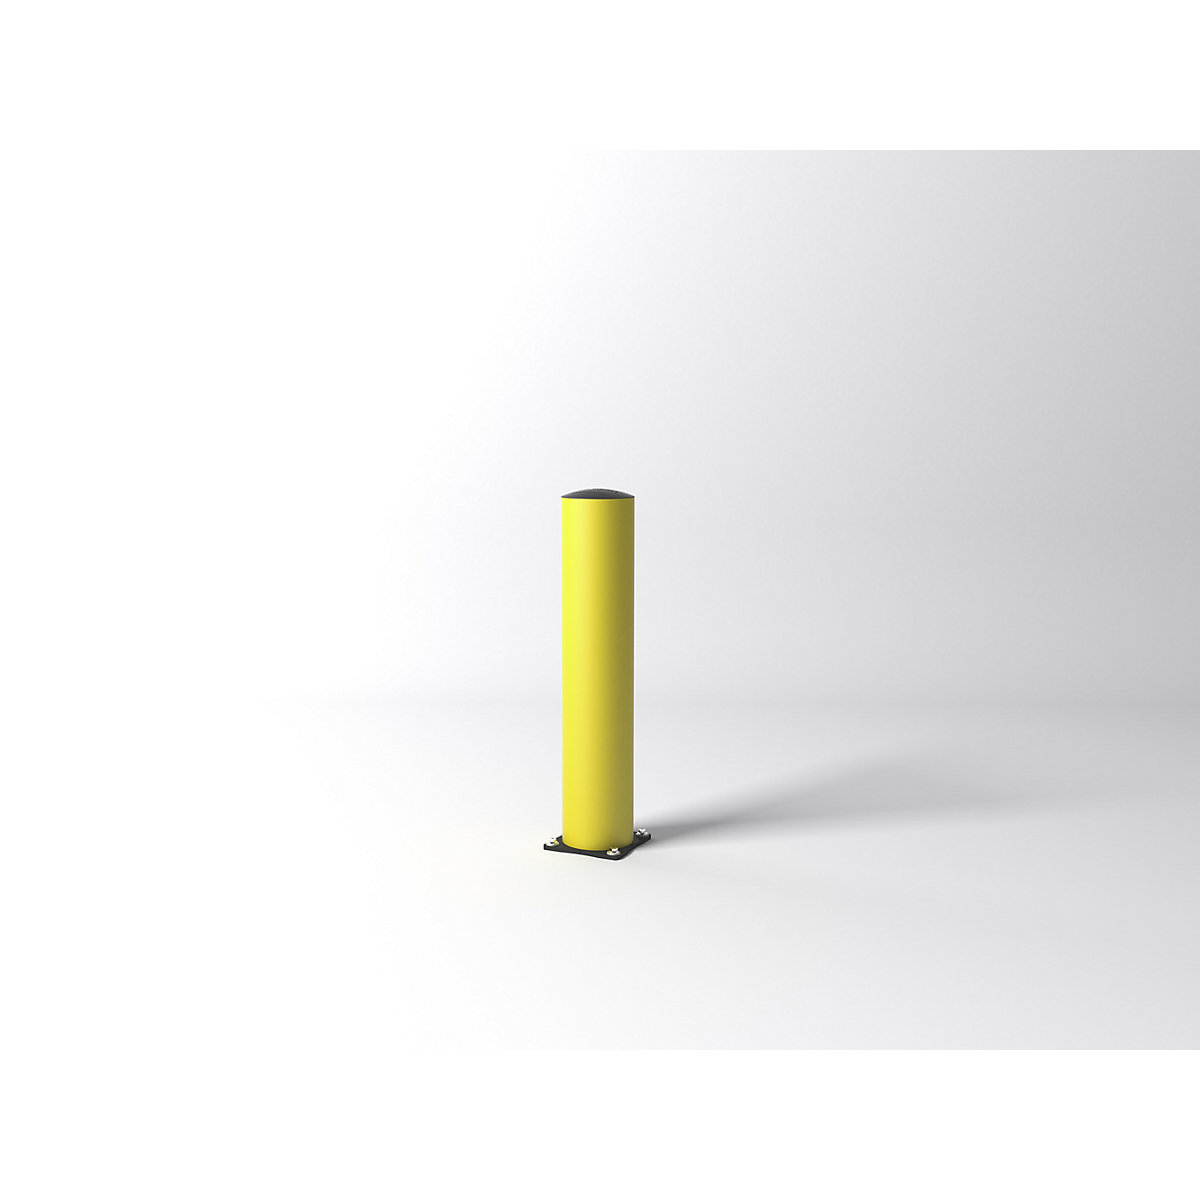 FLEX IMPACT Rammschutzpoller, Ø 200 mm, Höhe 1000 mm, gelb, verzinkte Bodenplatte